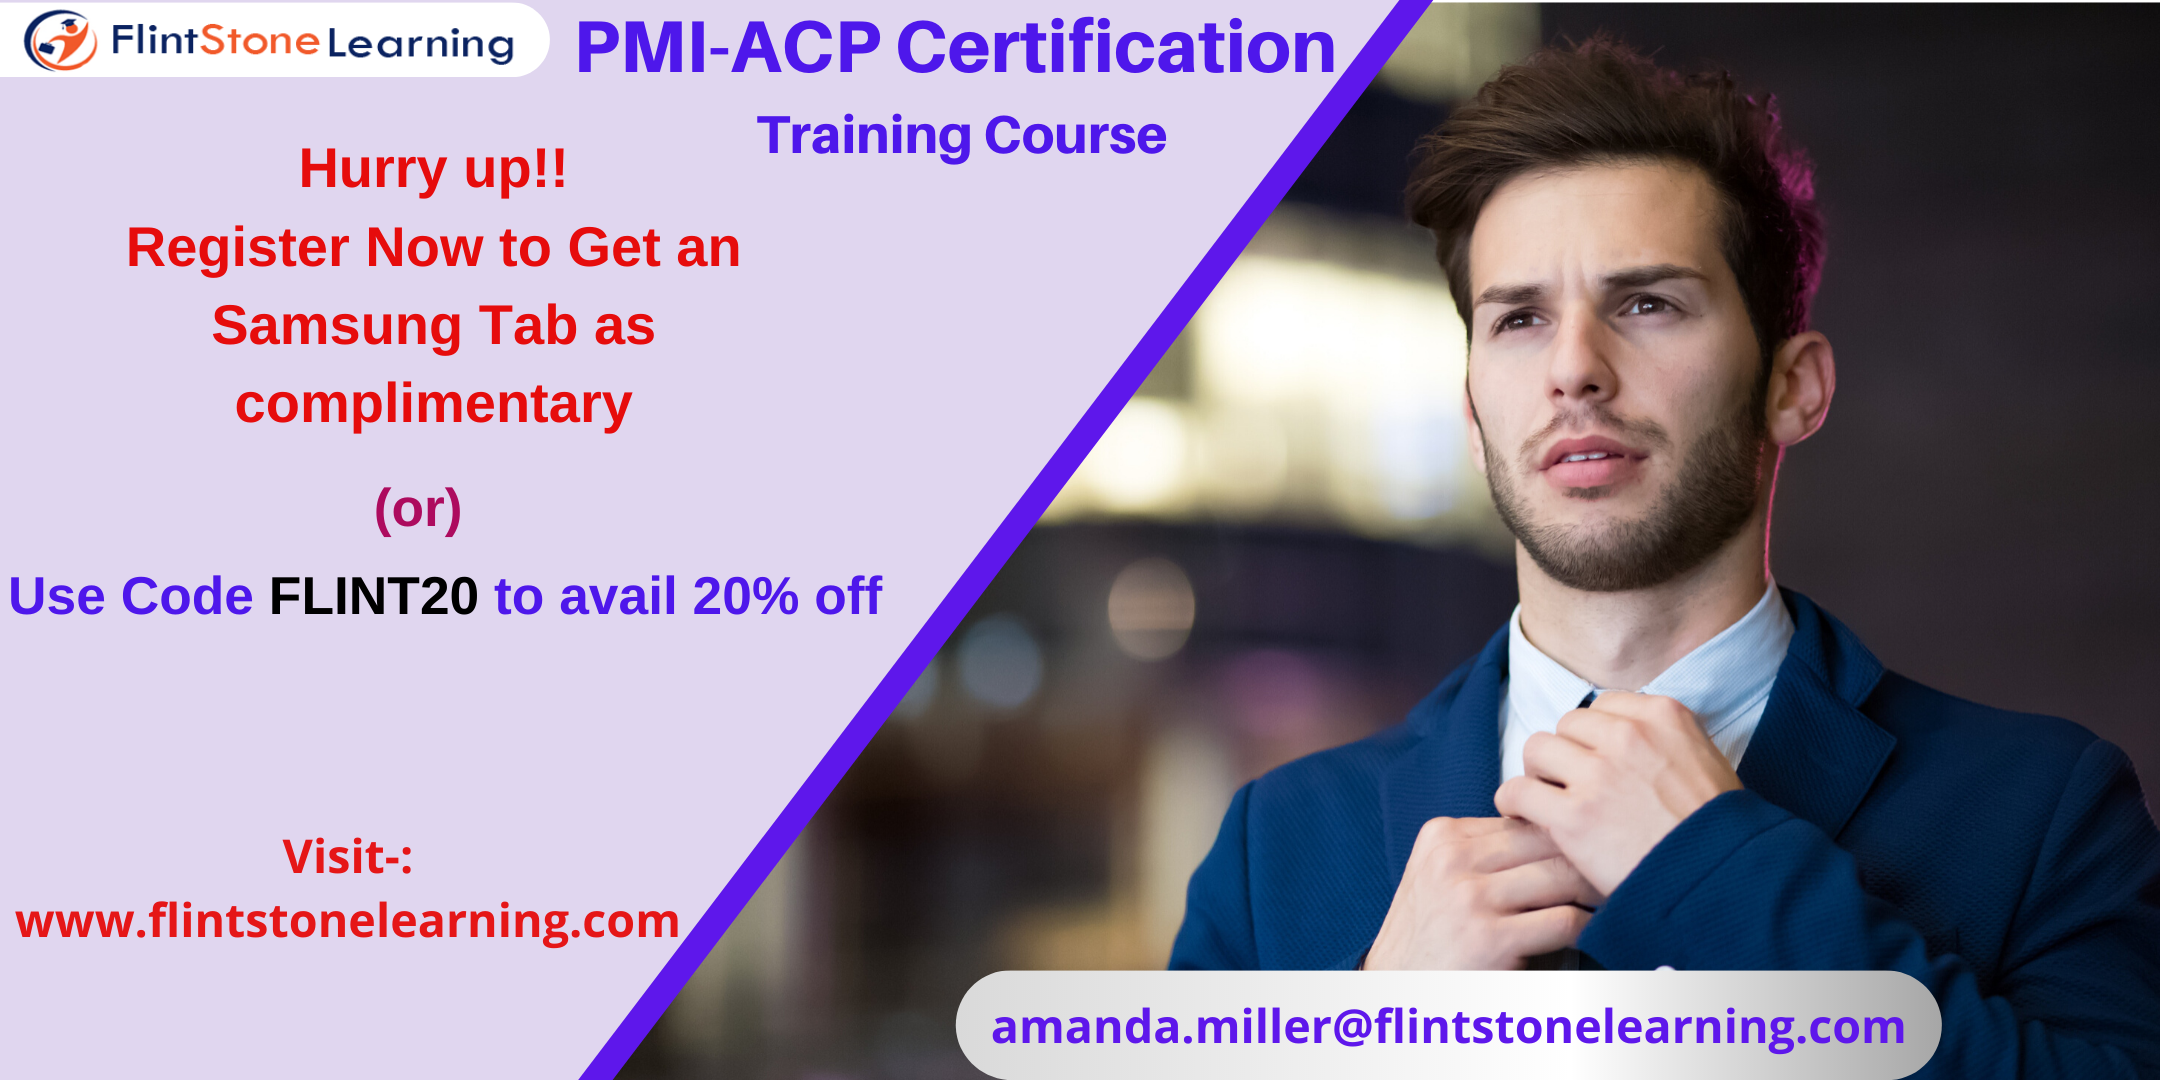 PMI-ACP Certification Training Course in El Monte, CA